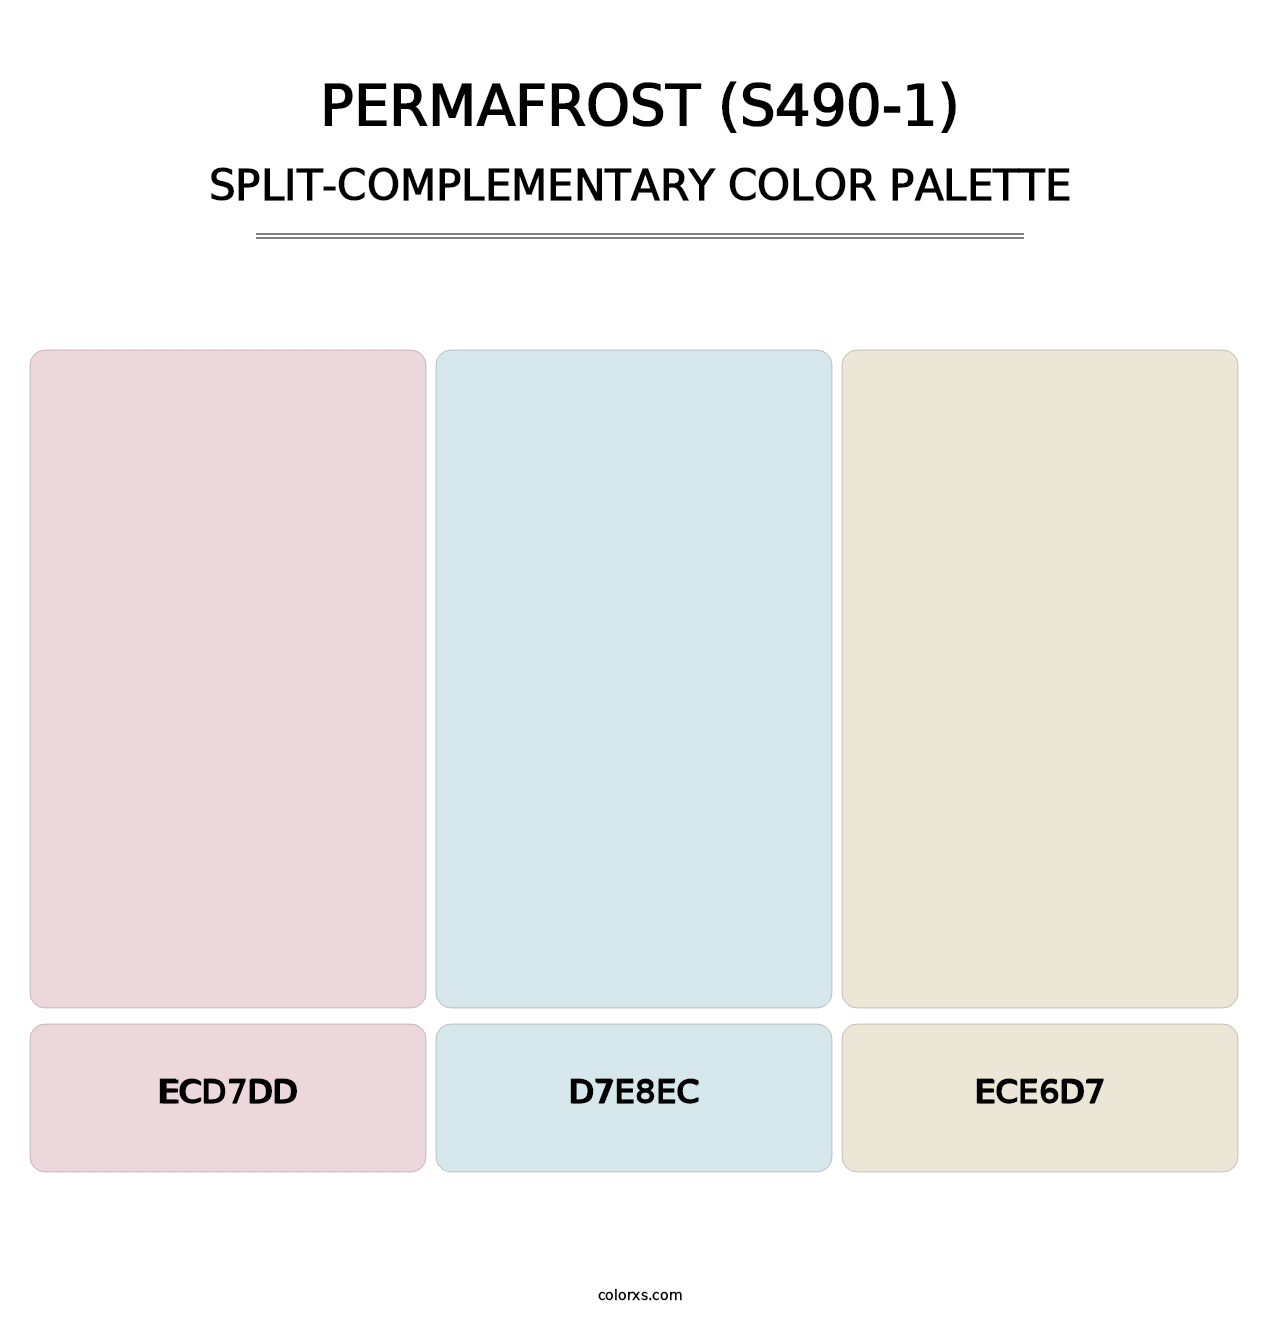 Permafrost (S490-1) - Split-Complementary Color Palette